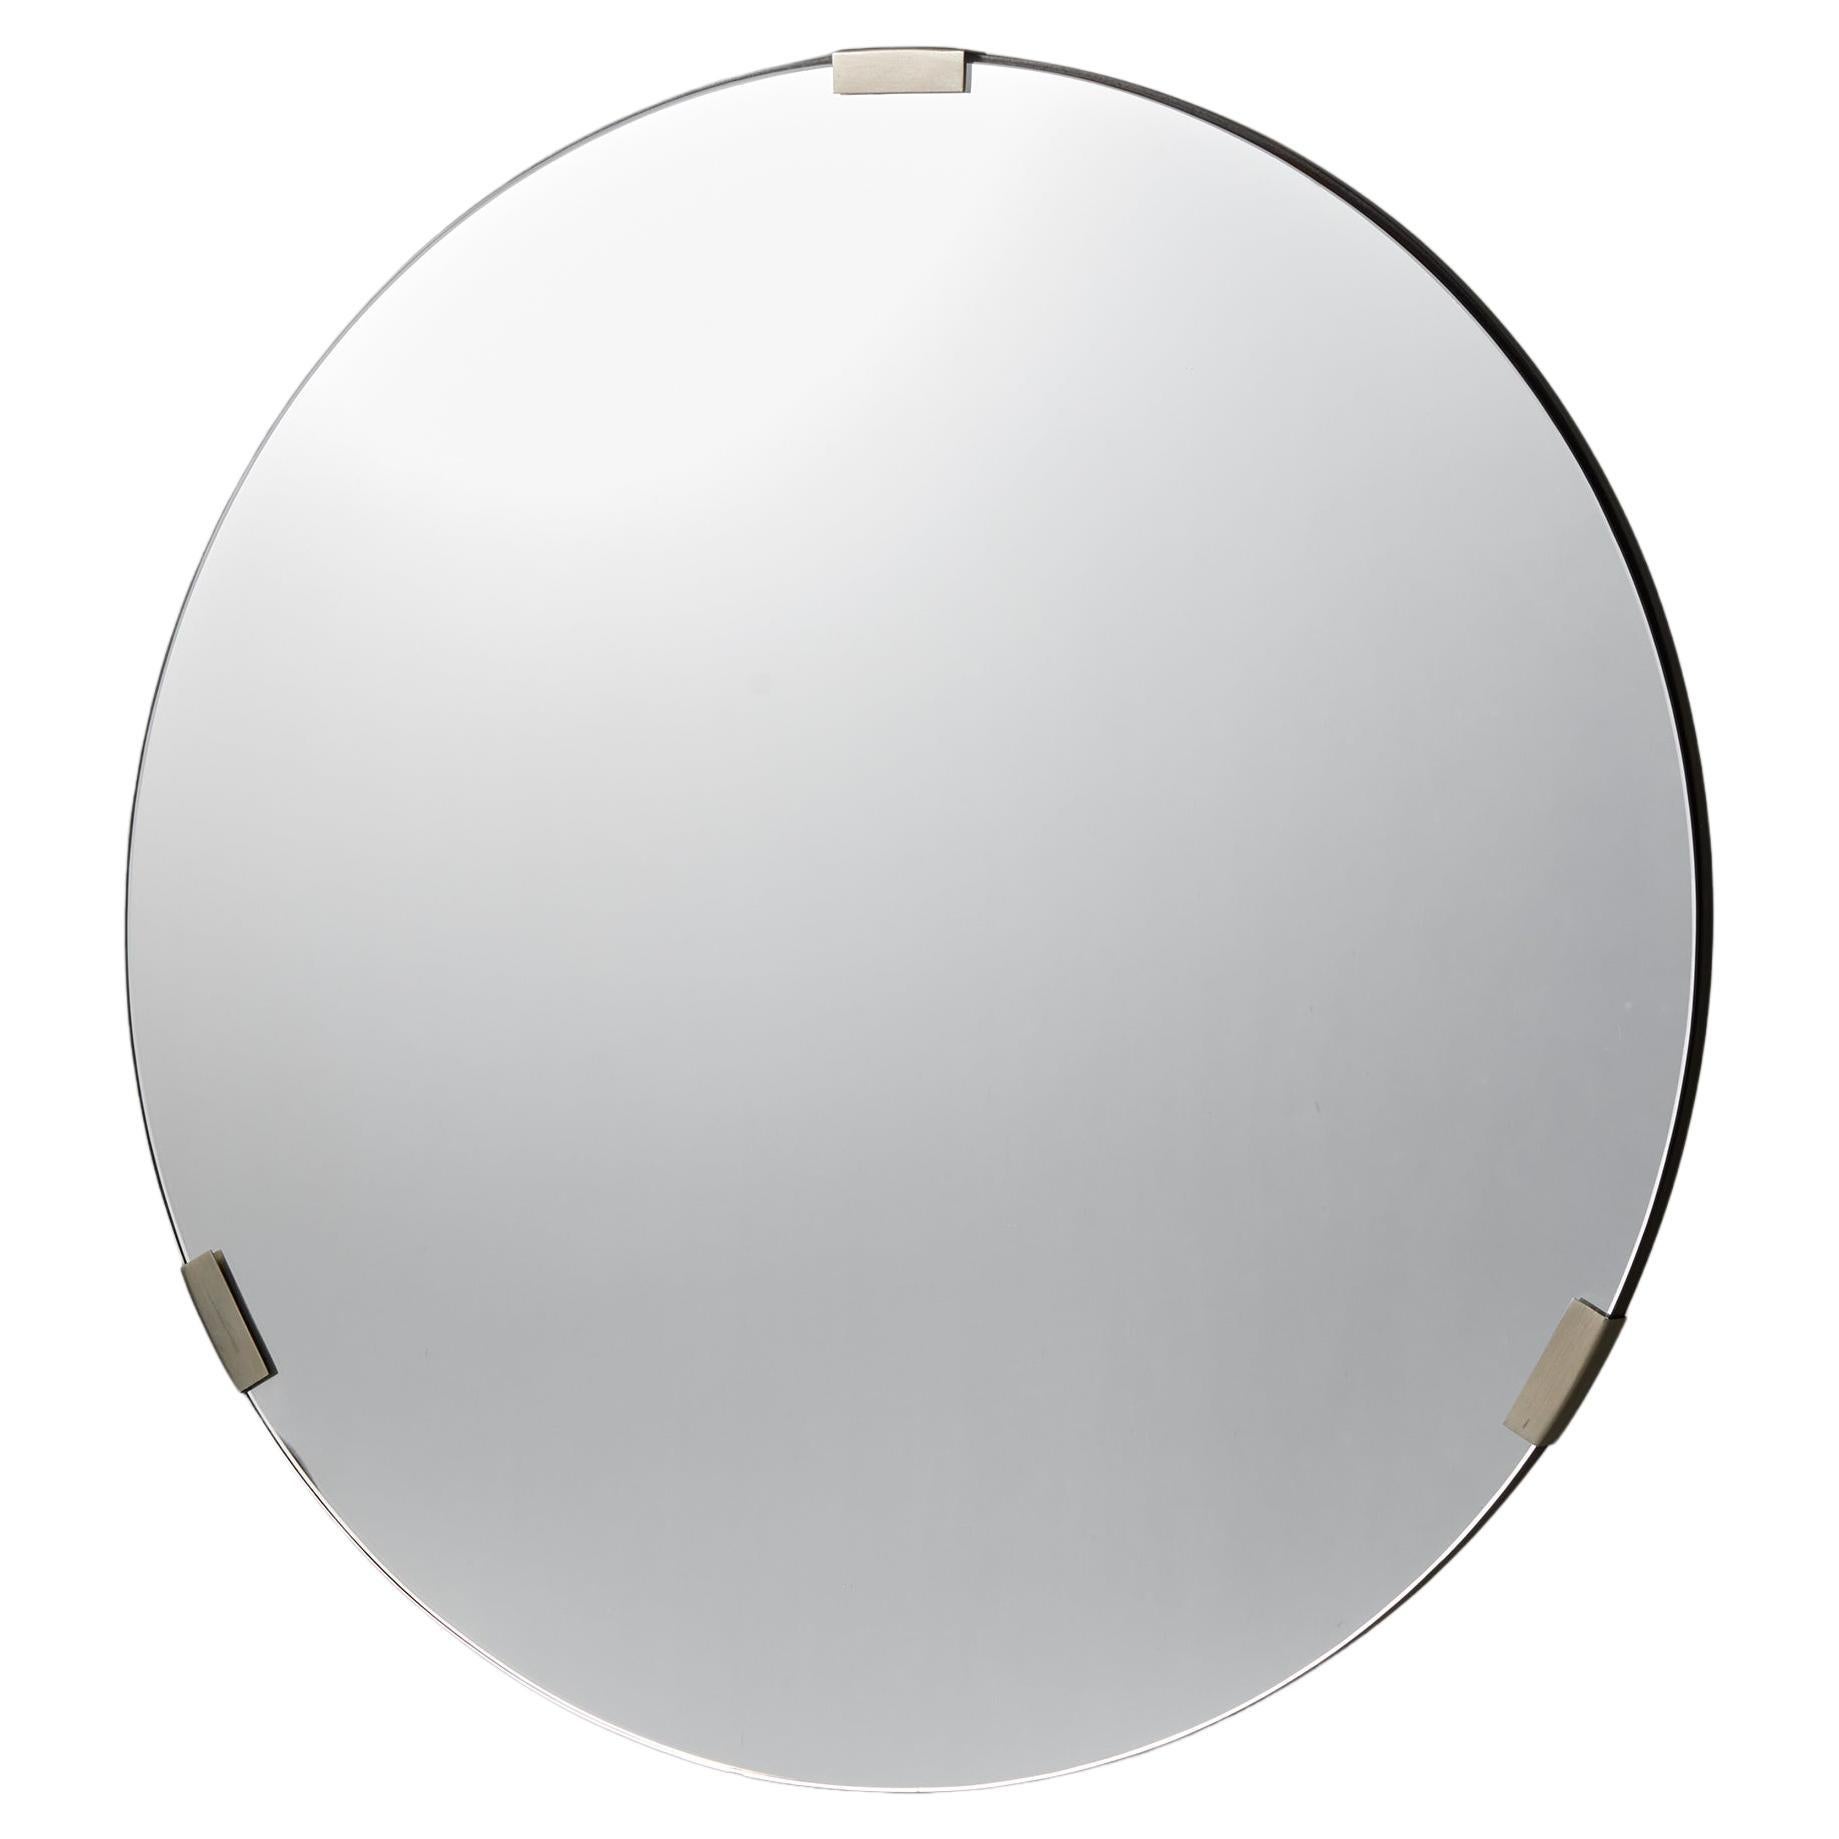 Mirror ‘Record’ designed by Axel Einar Hjorth for Nordiska Kompaniet, Sweden For Sale